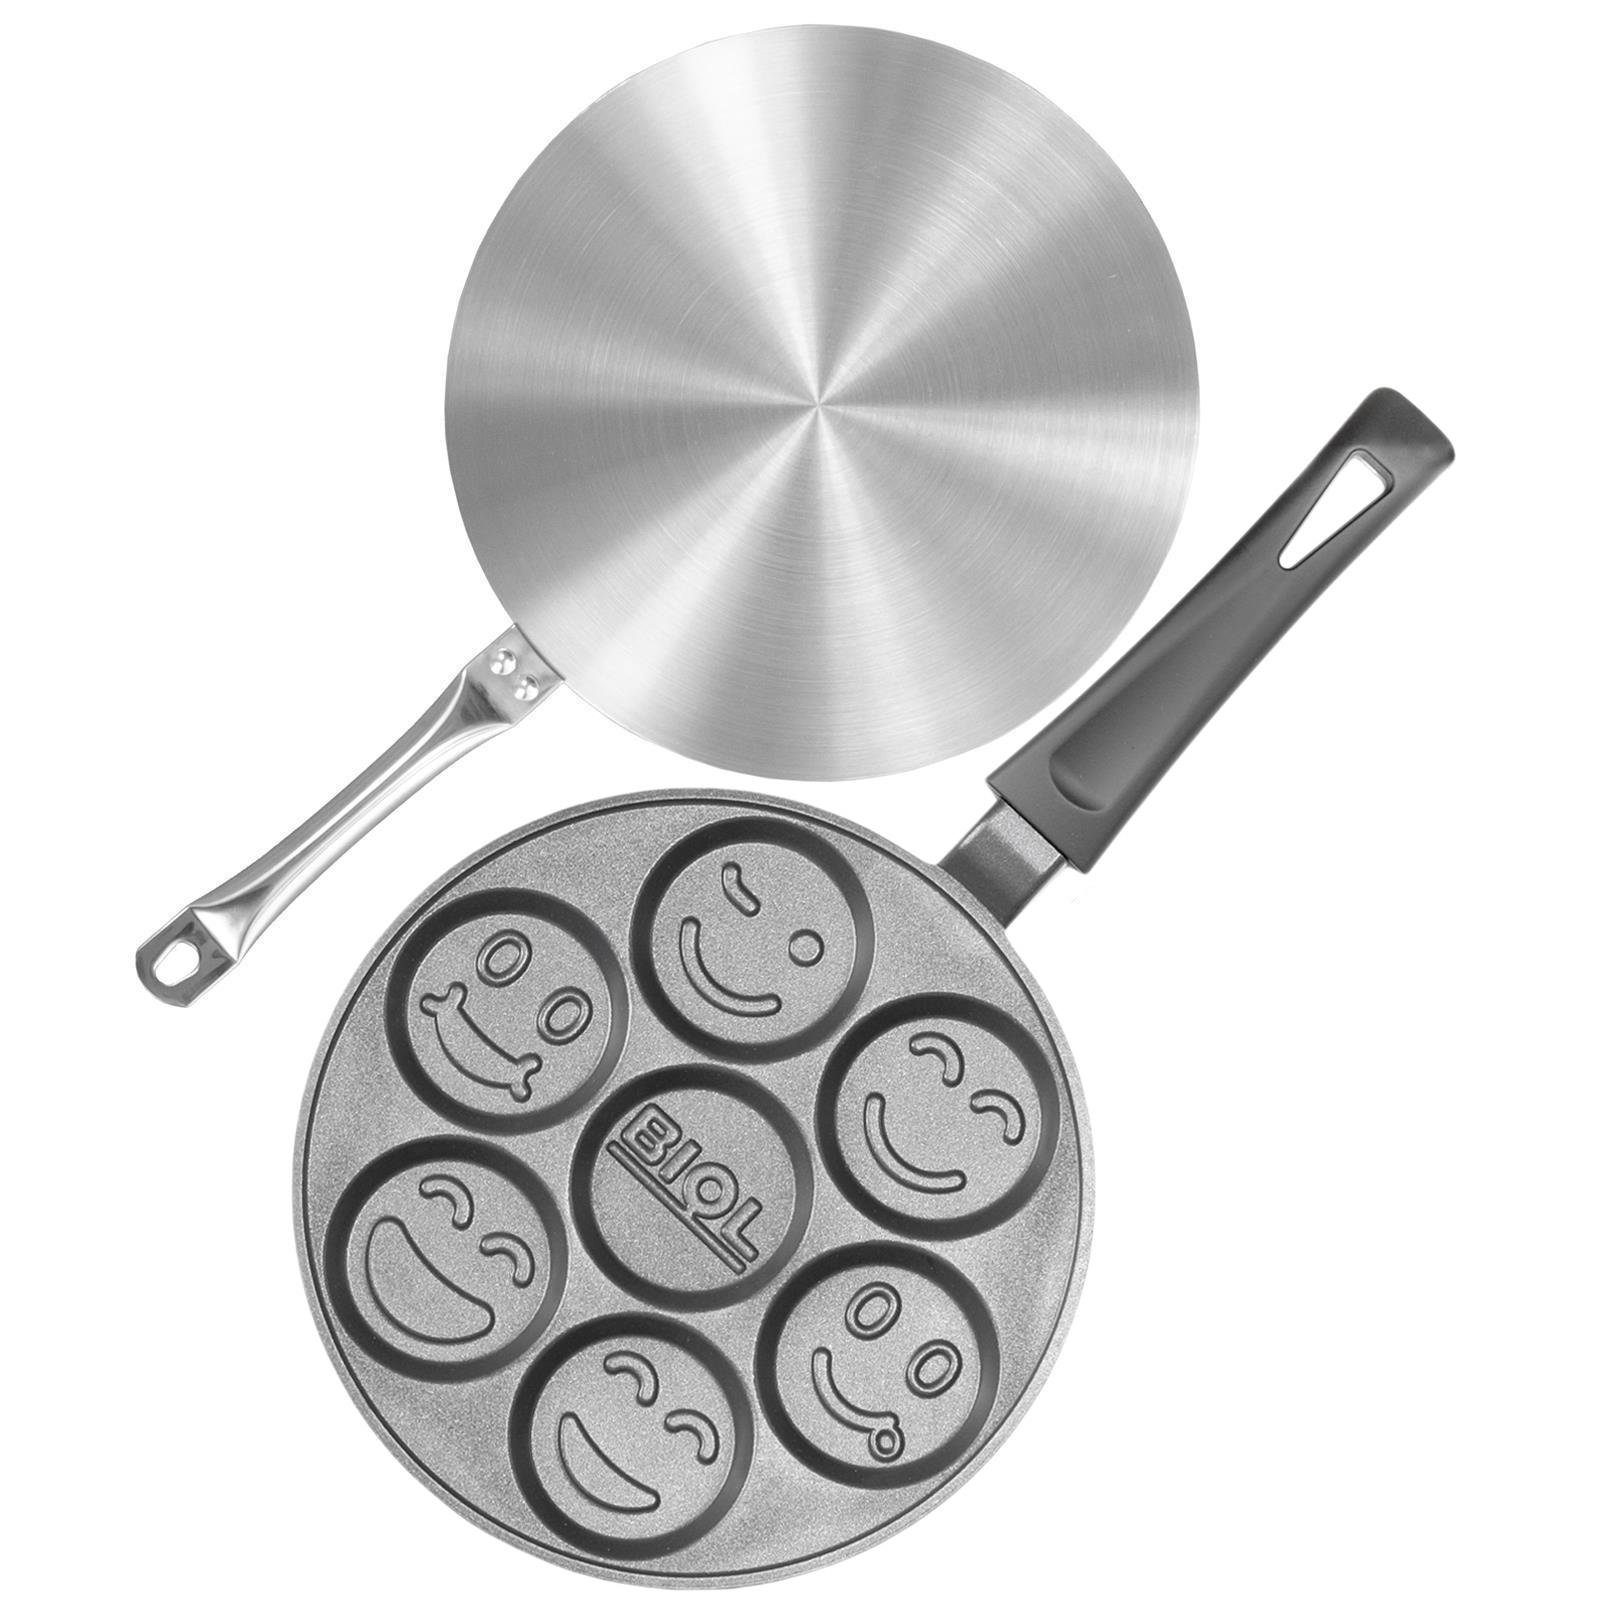 Spiegeleipfanne Aluminium Induktions-Adapterplatte) Pancakepfanne antihaftbeschichtet 4BIG.fun Pfannkuchenpfanne, (Spiegeleipfanne Crêpepfanne mit